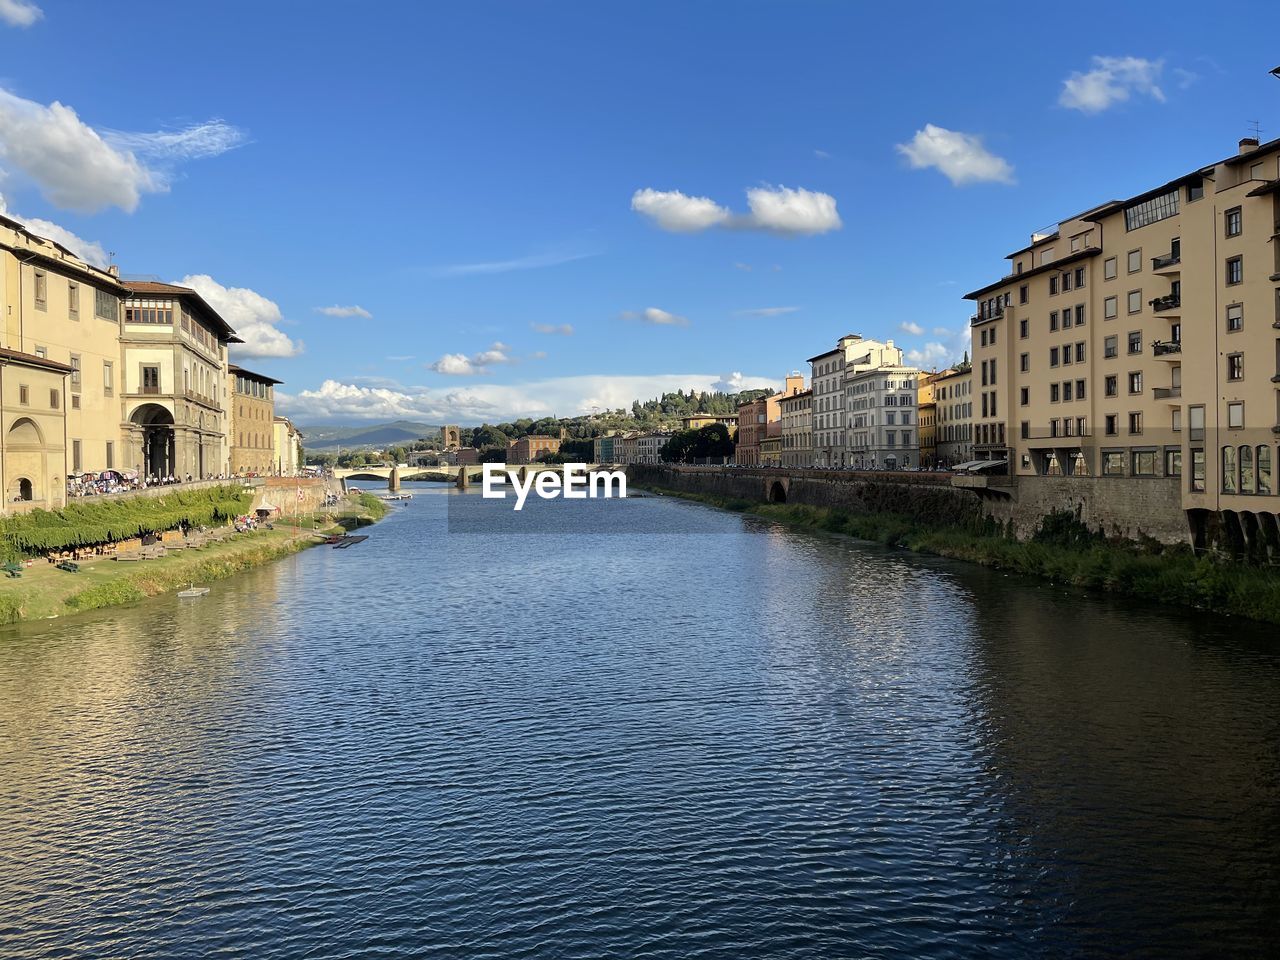 River passing through city buildings